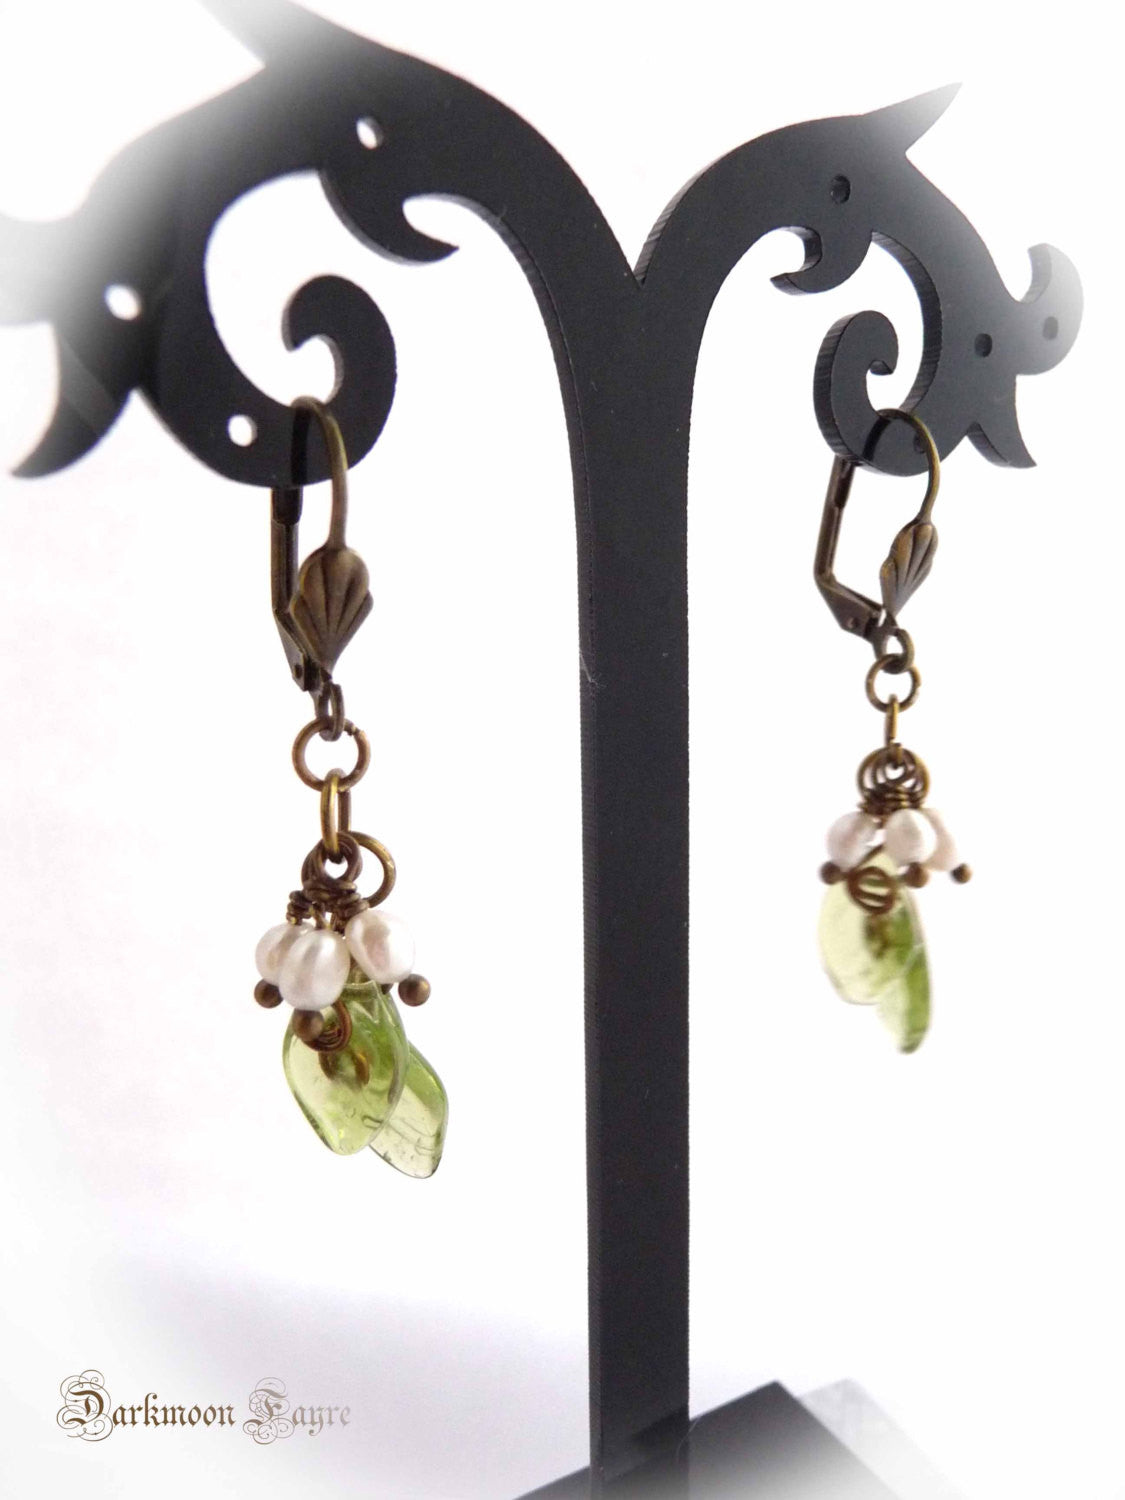 Mistletoe Earrings. Freshwater Pearl & Glass Leaves. Hand Wired Antiqued Bronze - Darkmoon Fayre